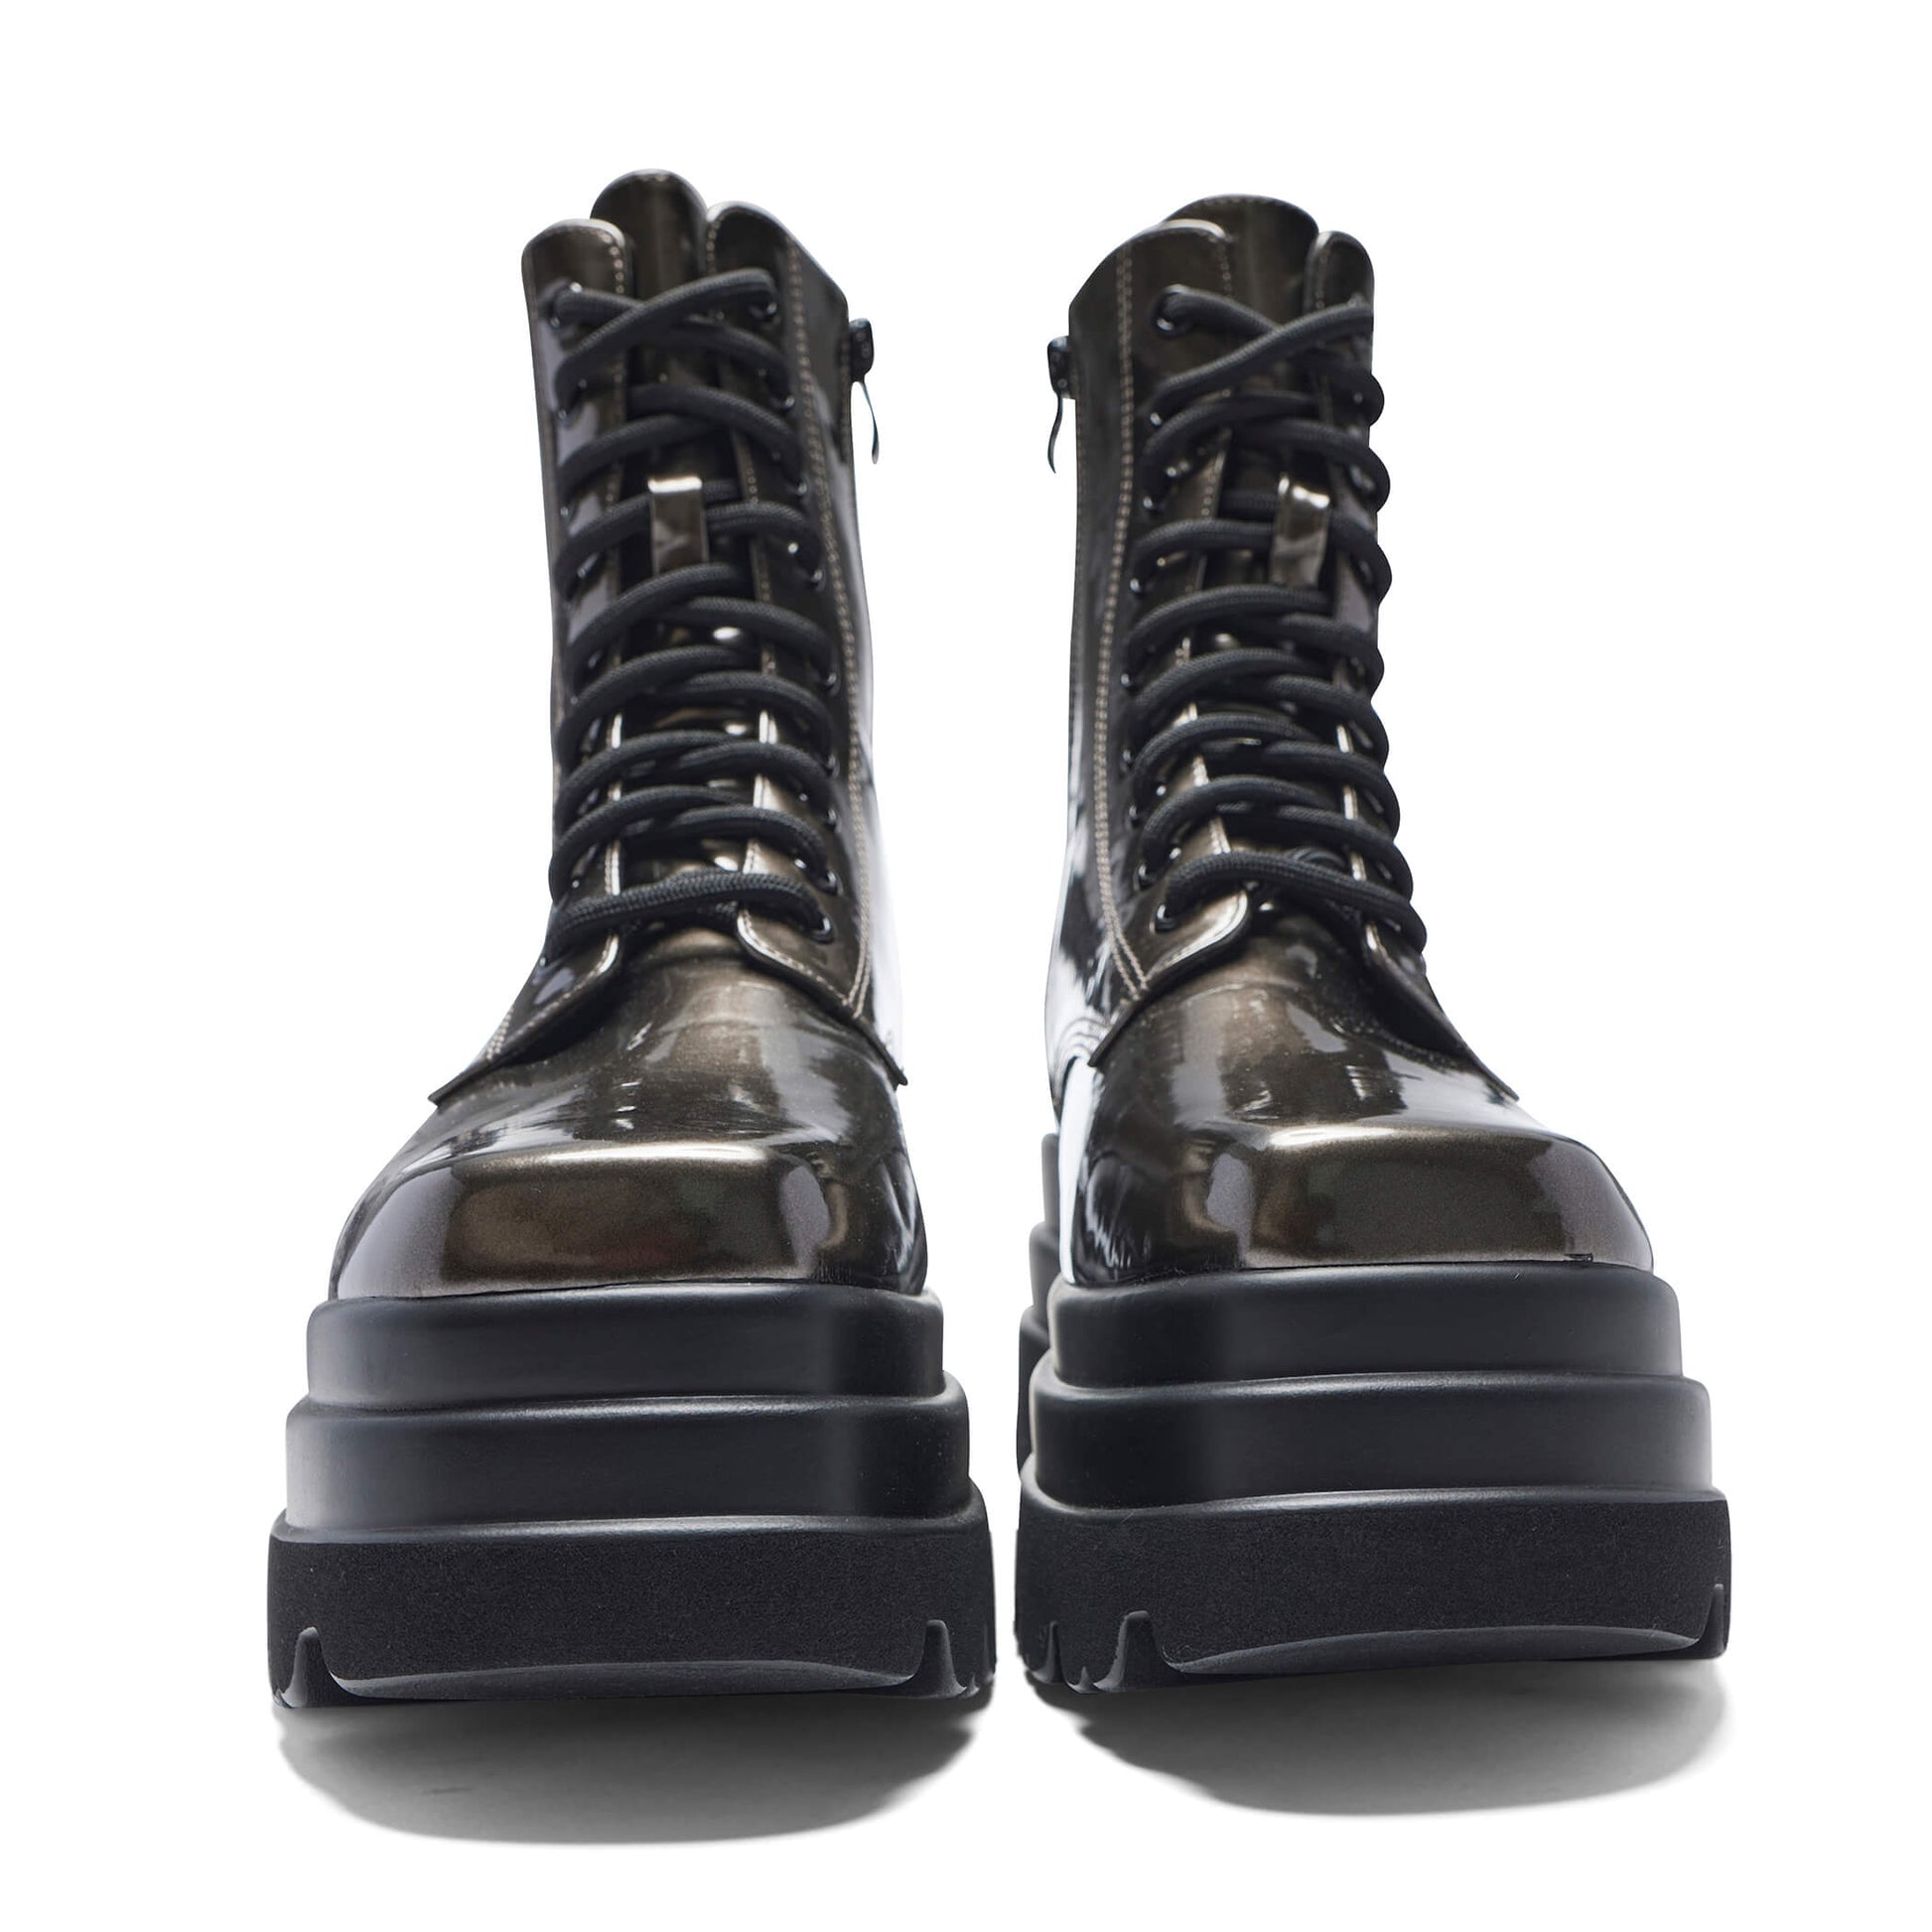 Deathwatch Trident Platform Boots - Static Grey - KOI Footwear - Front Detail View